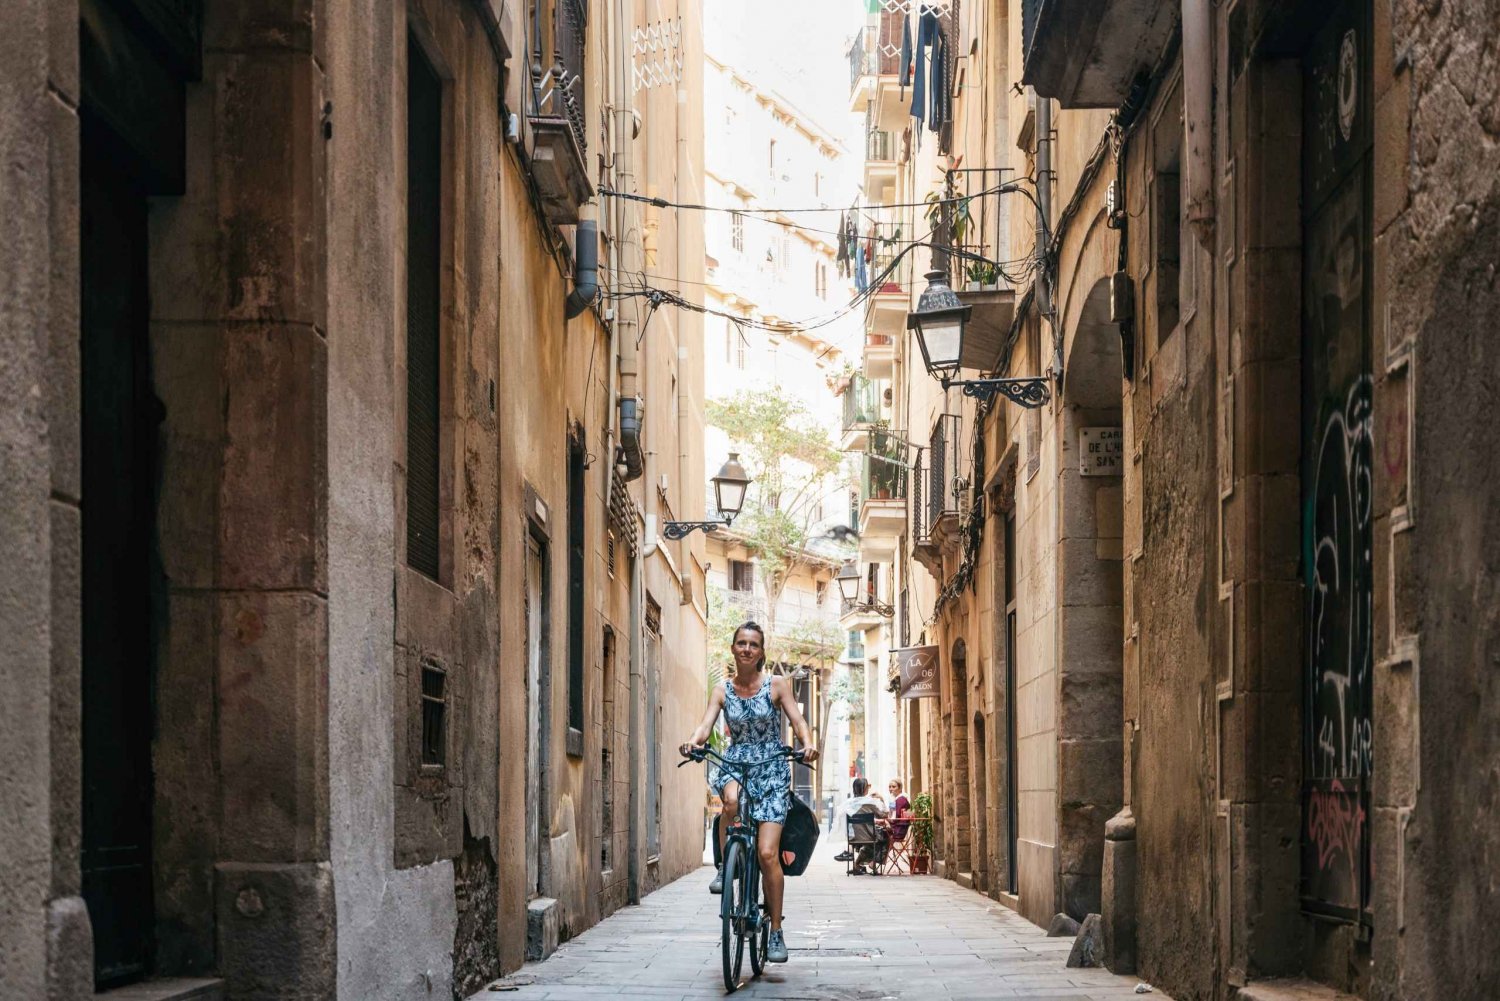 Barcellona: Sagrada Família e tour in bici standard o e-bike